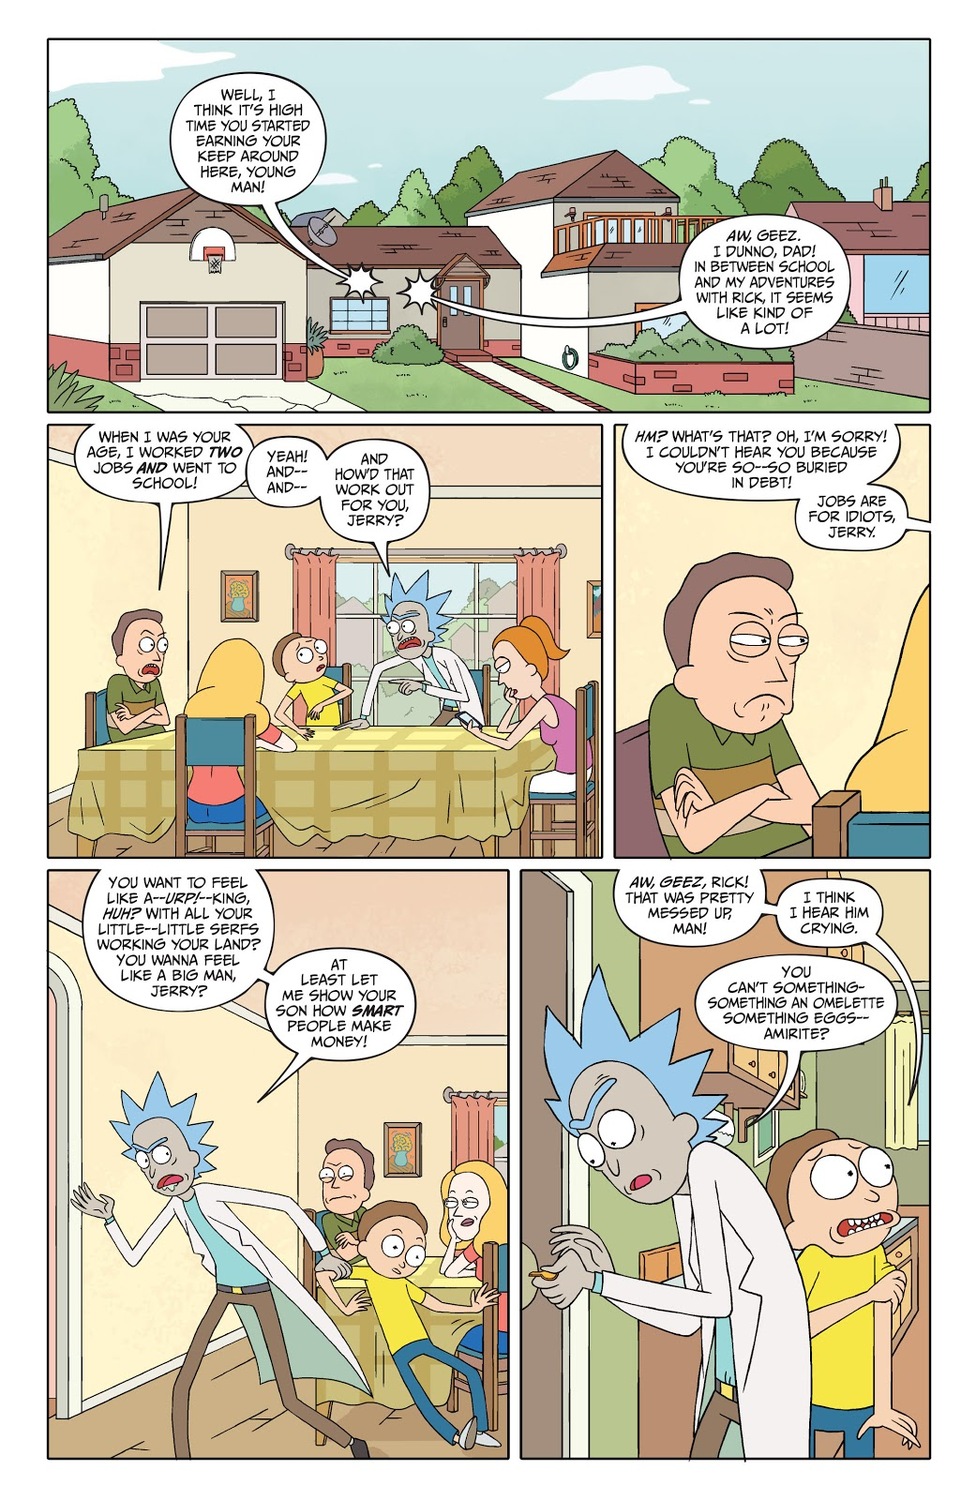 Rick and Morty. Vol. 1 TPB